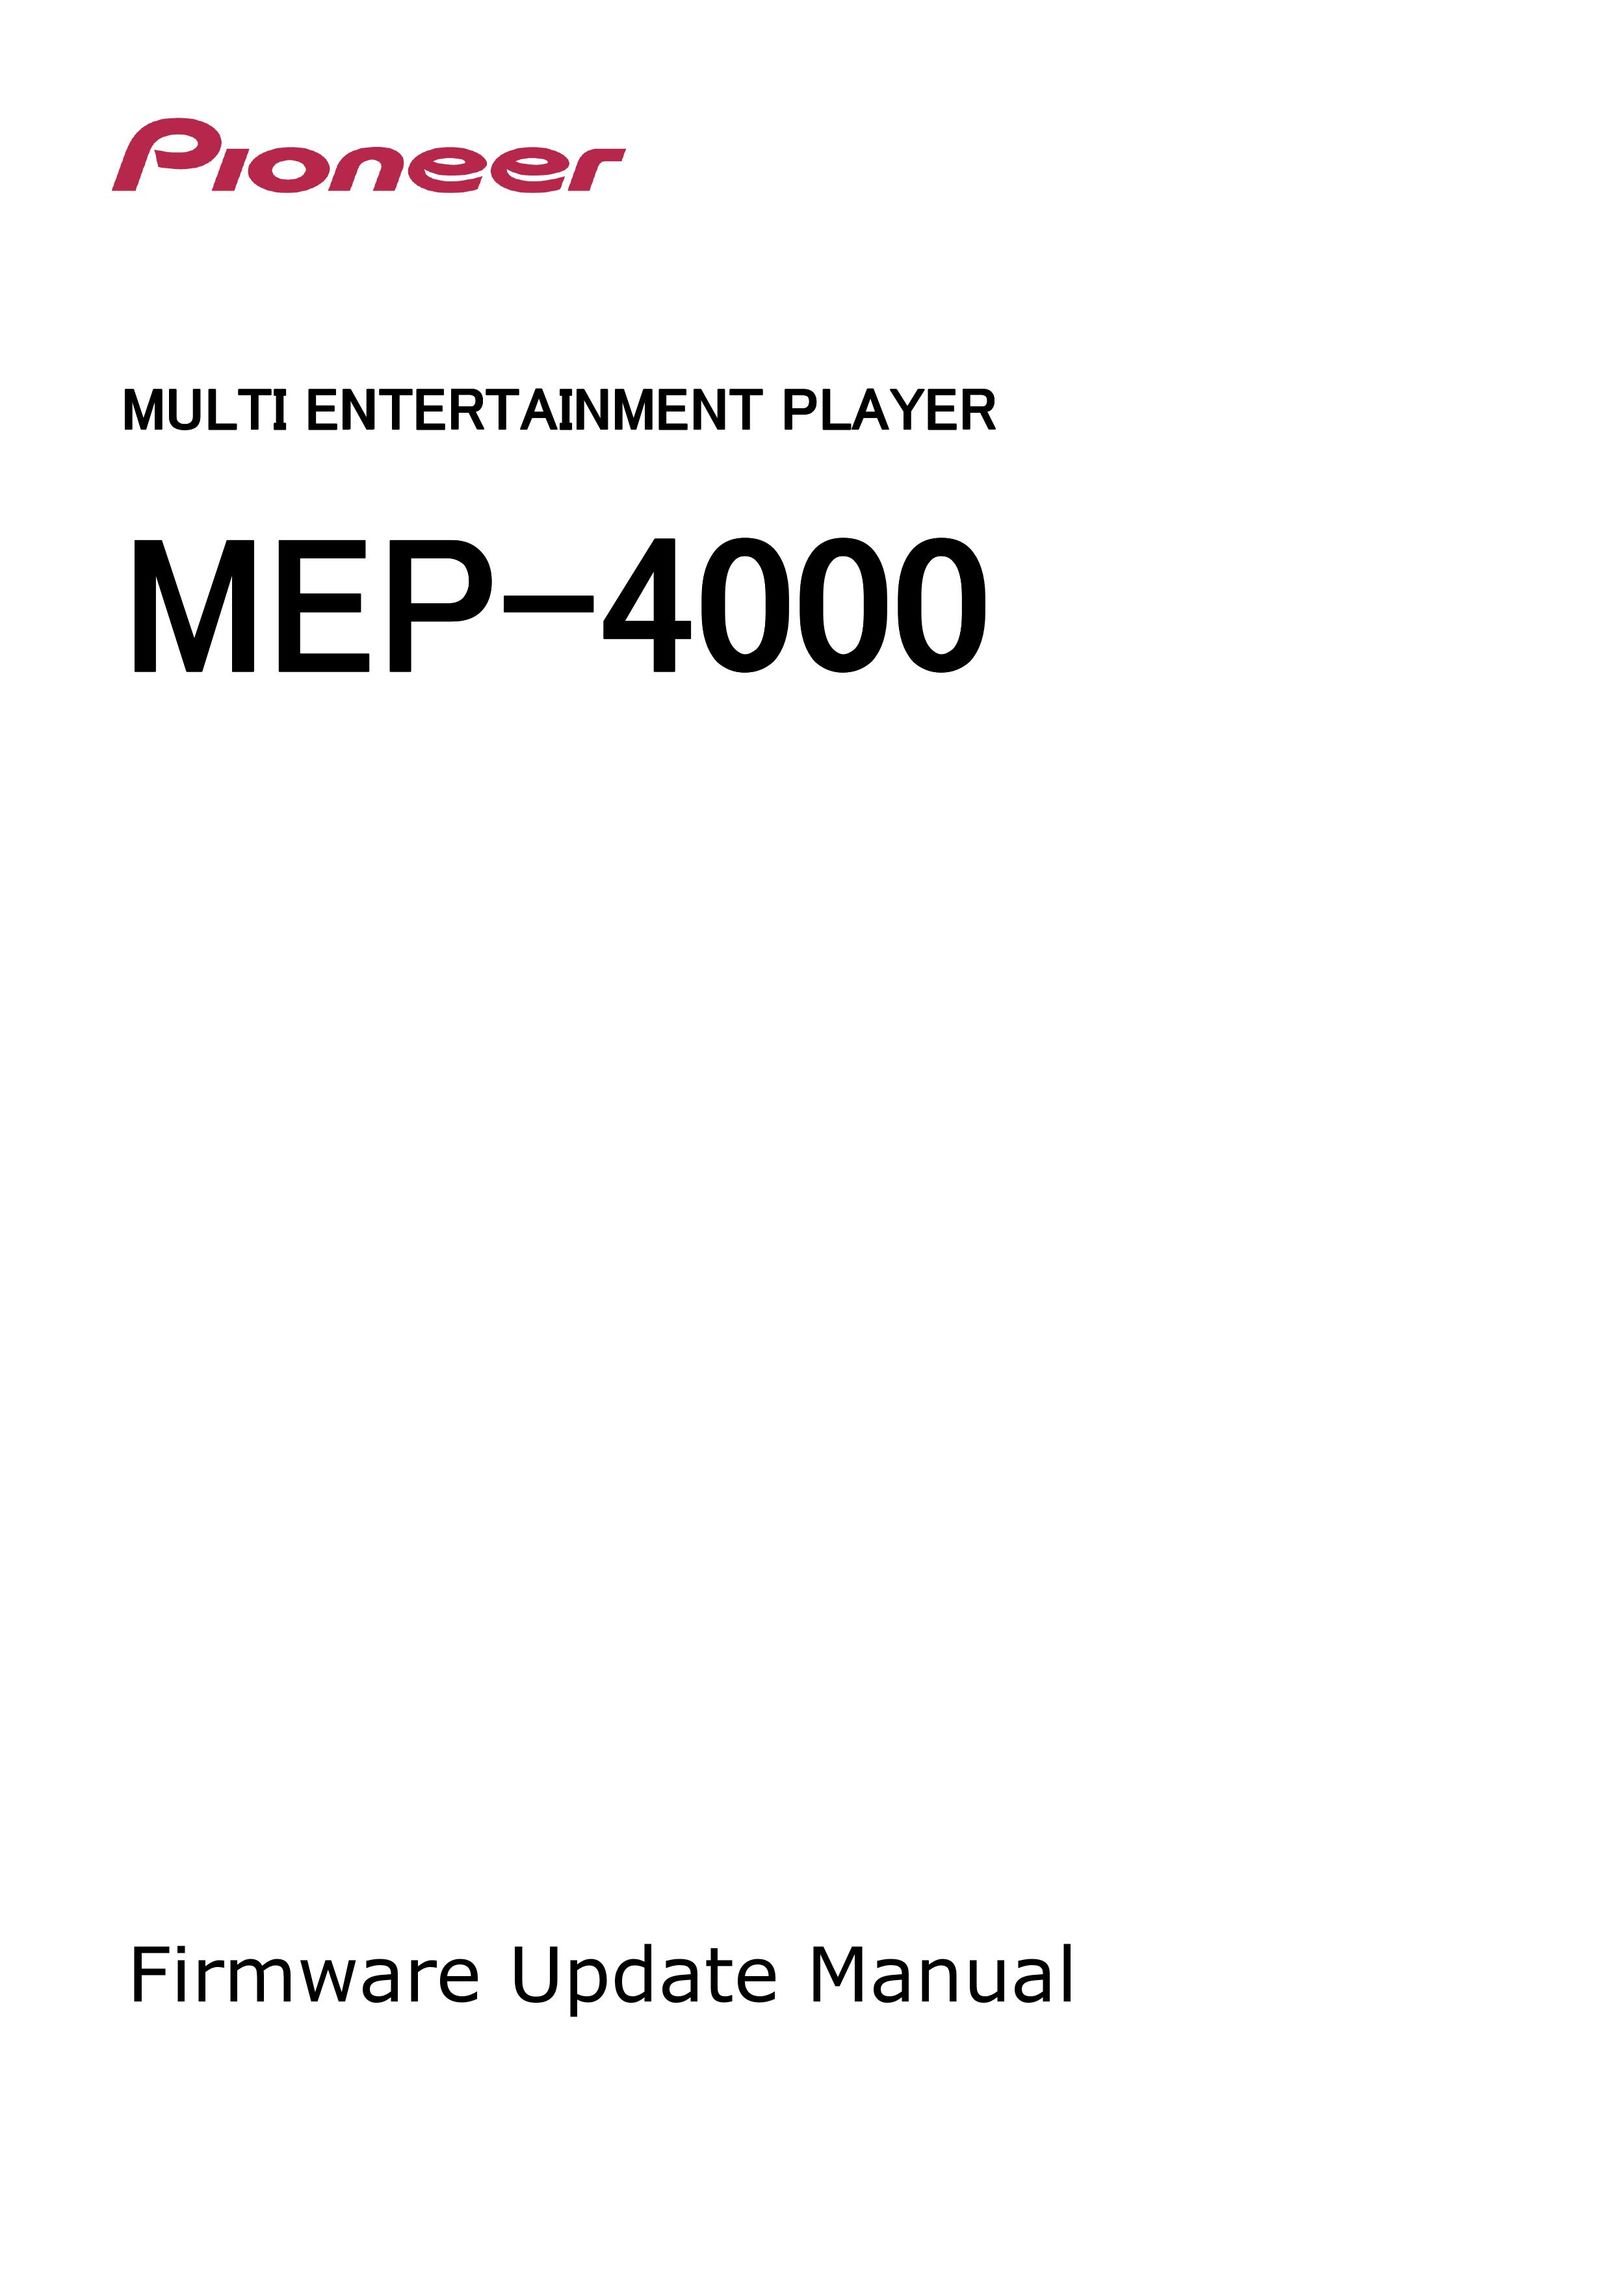 Pioneer Multi Entertainment Player Kitchen Entertainment Center User Manual